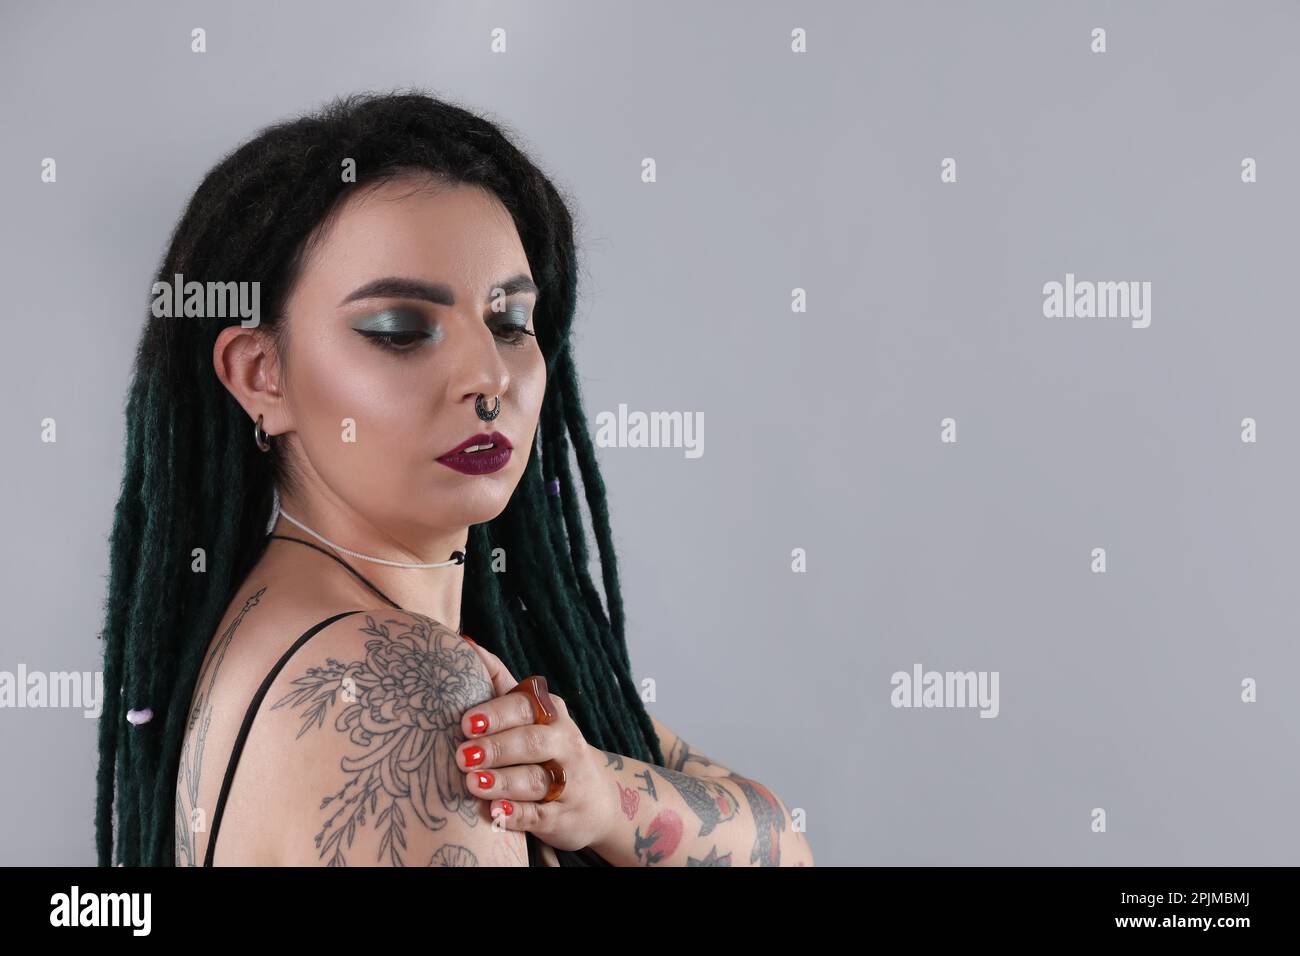 Pin by Monica O on Rostros | Neck tattoos women, Girl tattoos, Throat tattoo